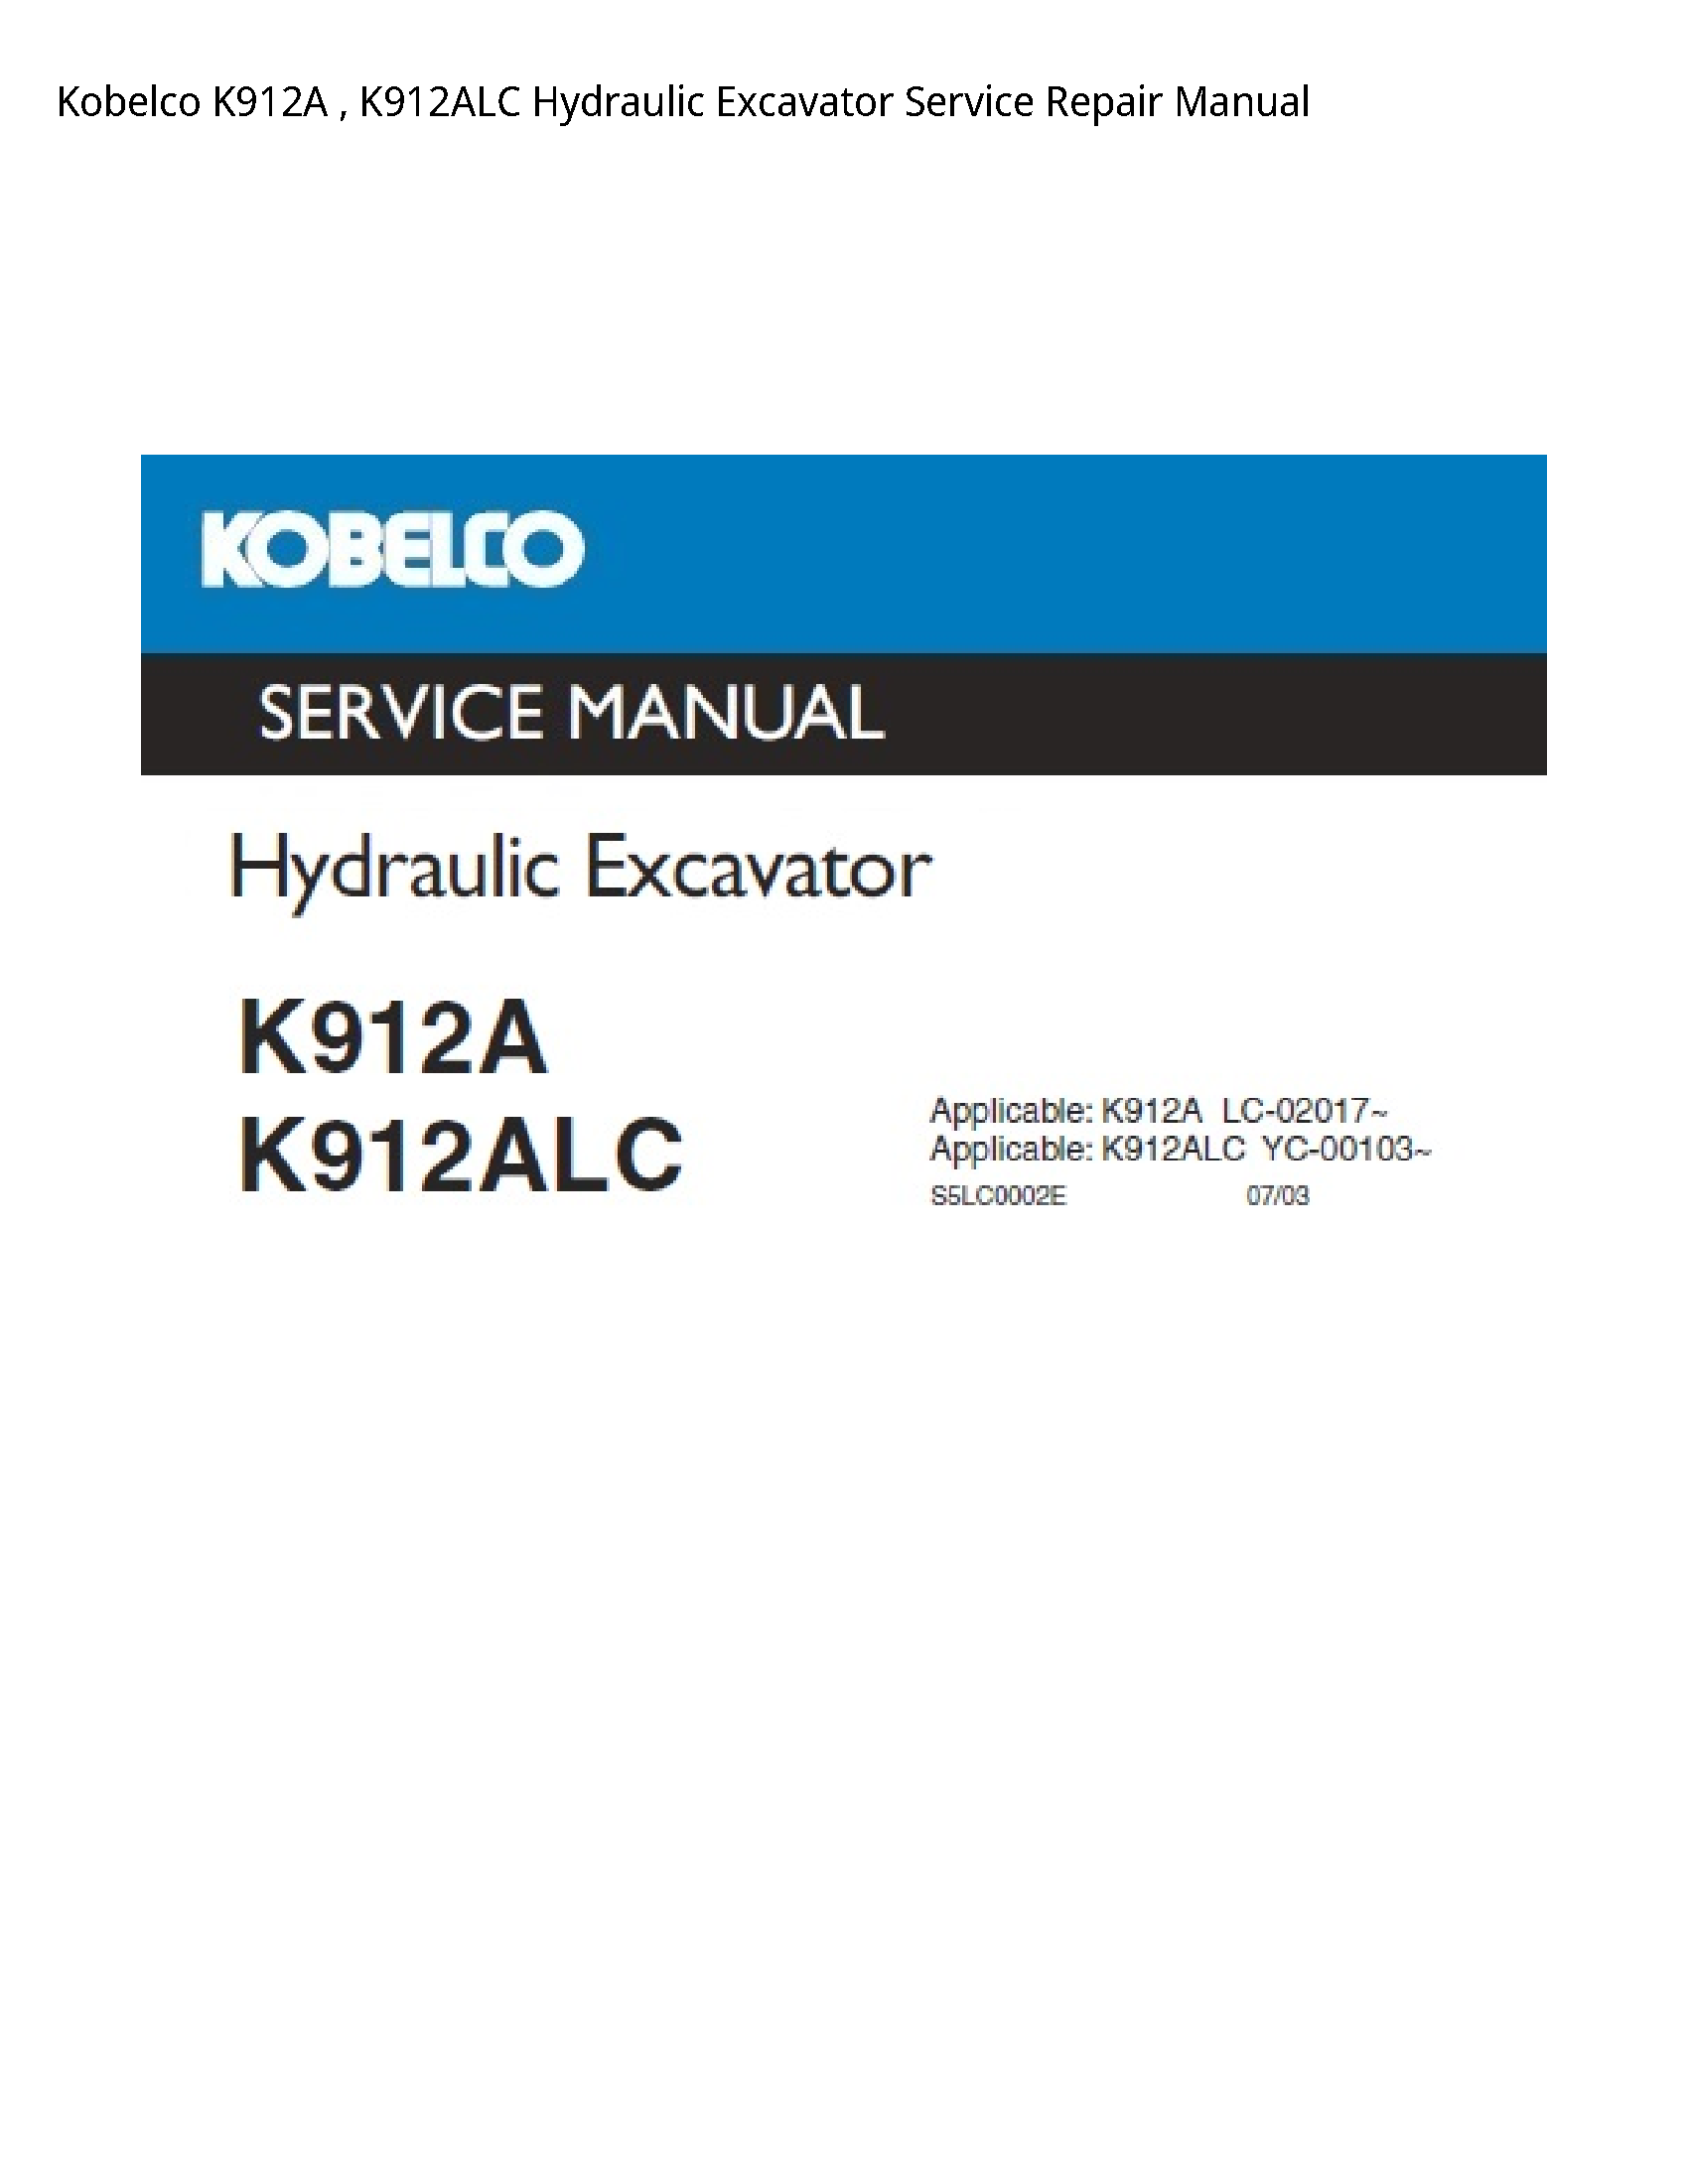 Kobelco K912A Hydraulic Excavator manual